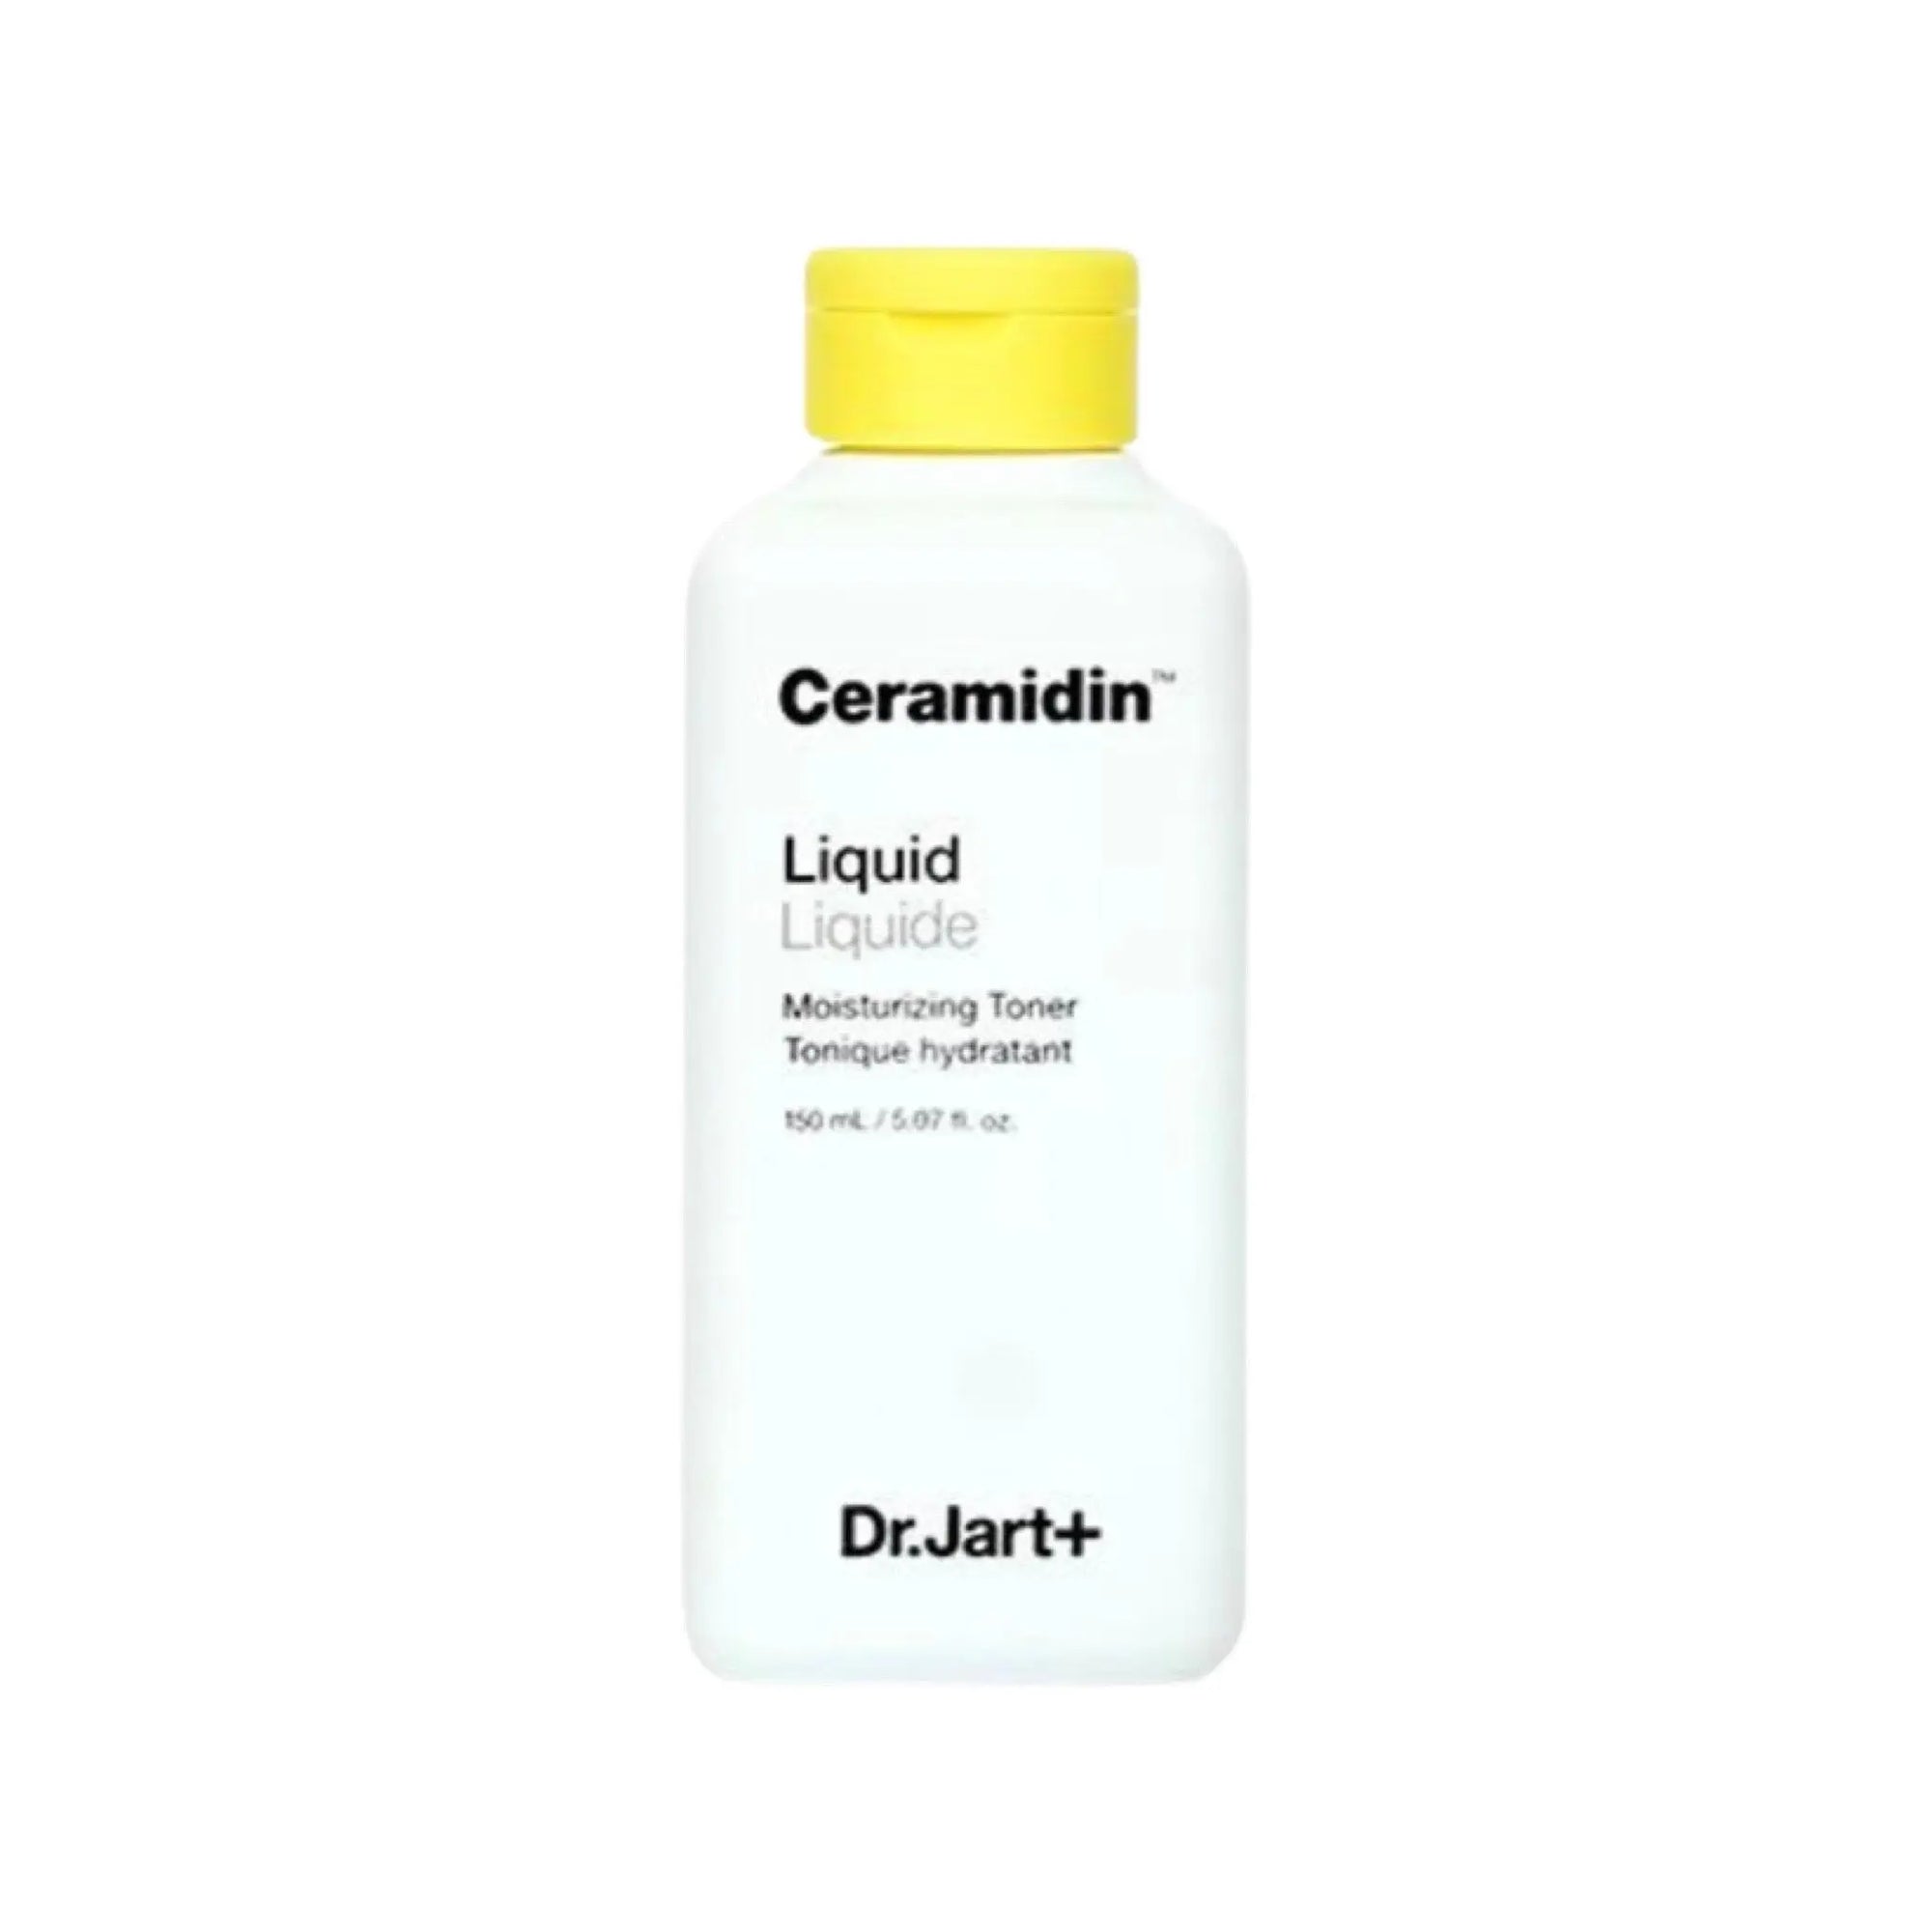 Dr. Jart+ - Ceramidin Liquid 150mL Dr. Jart+